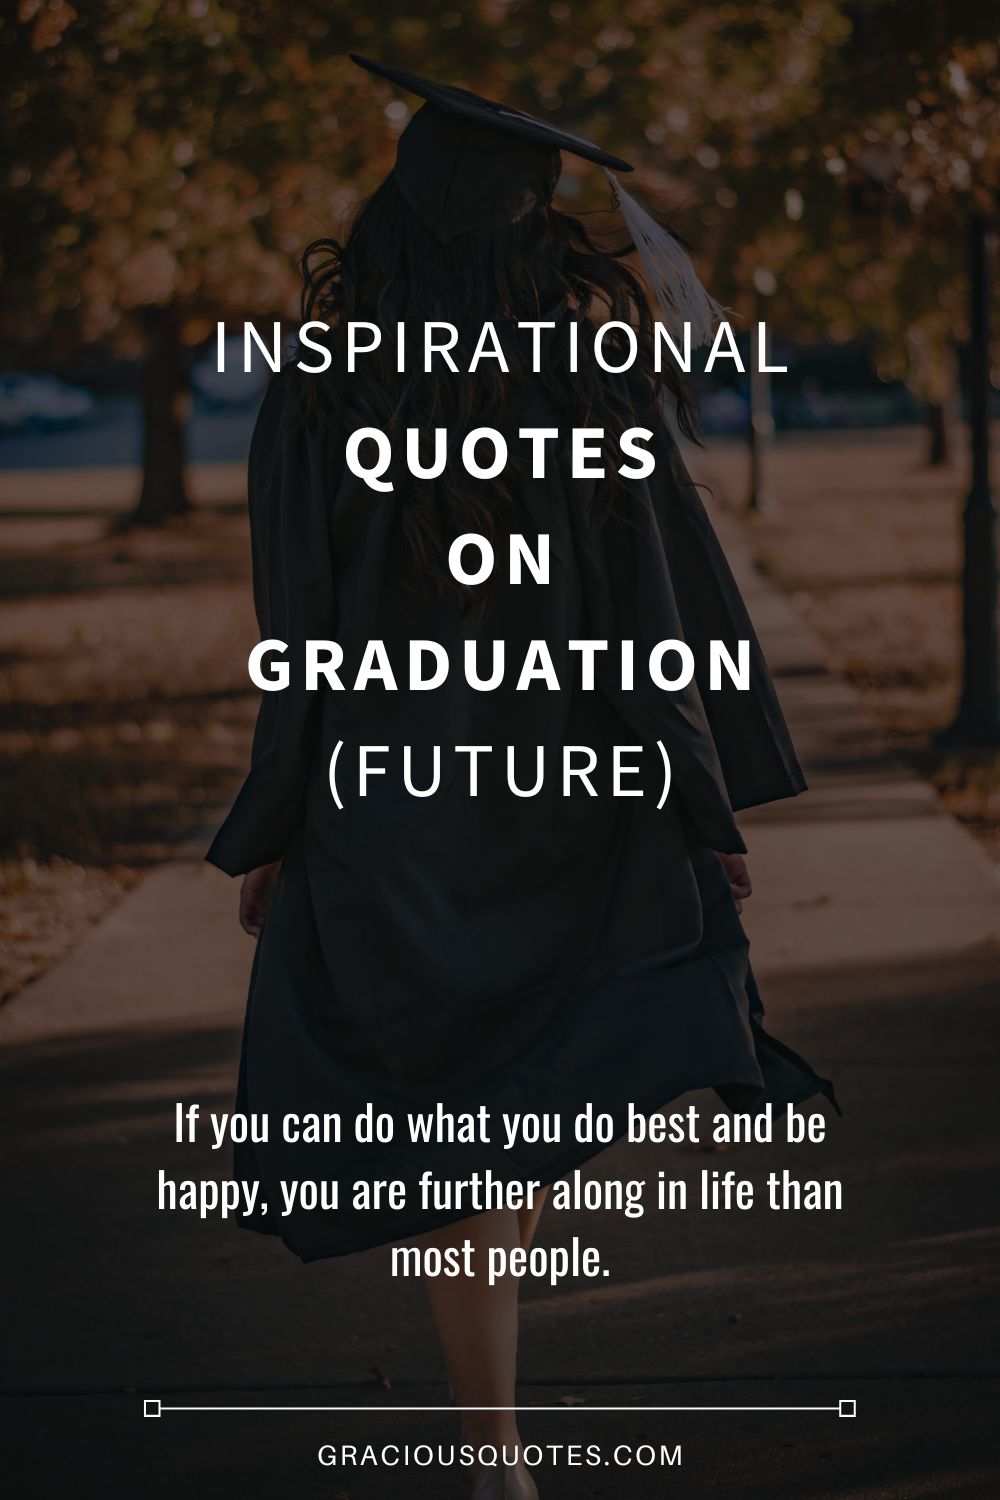 78 Inspirational Quotes on Graduation (FUTURE)